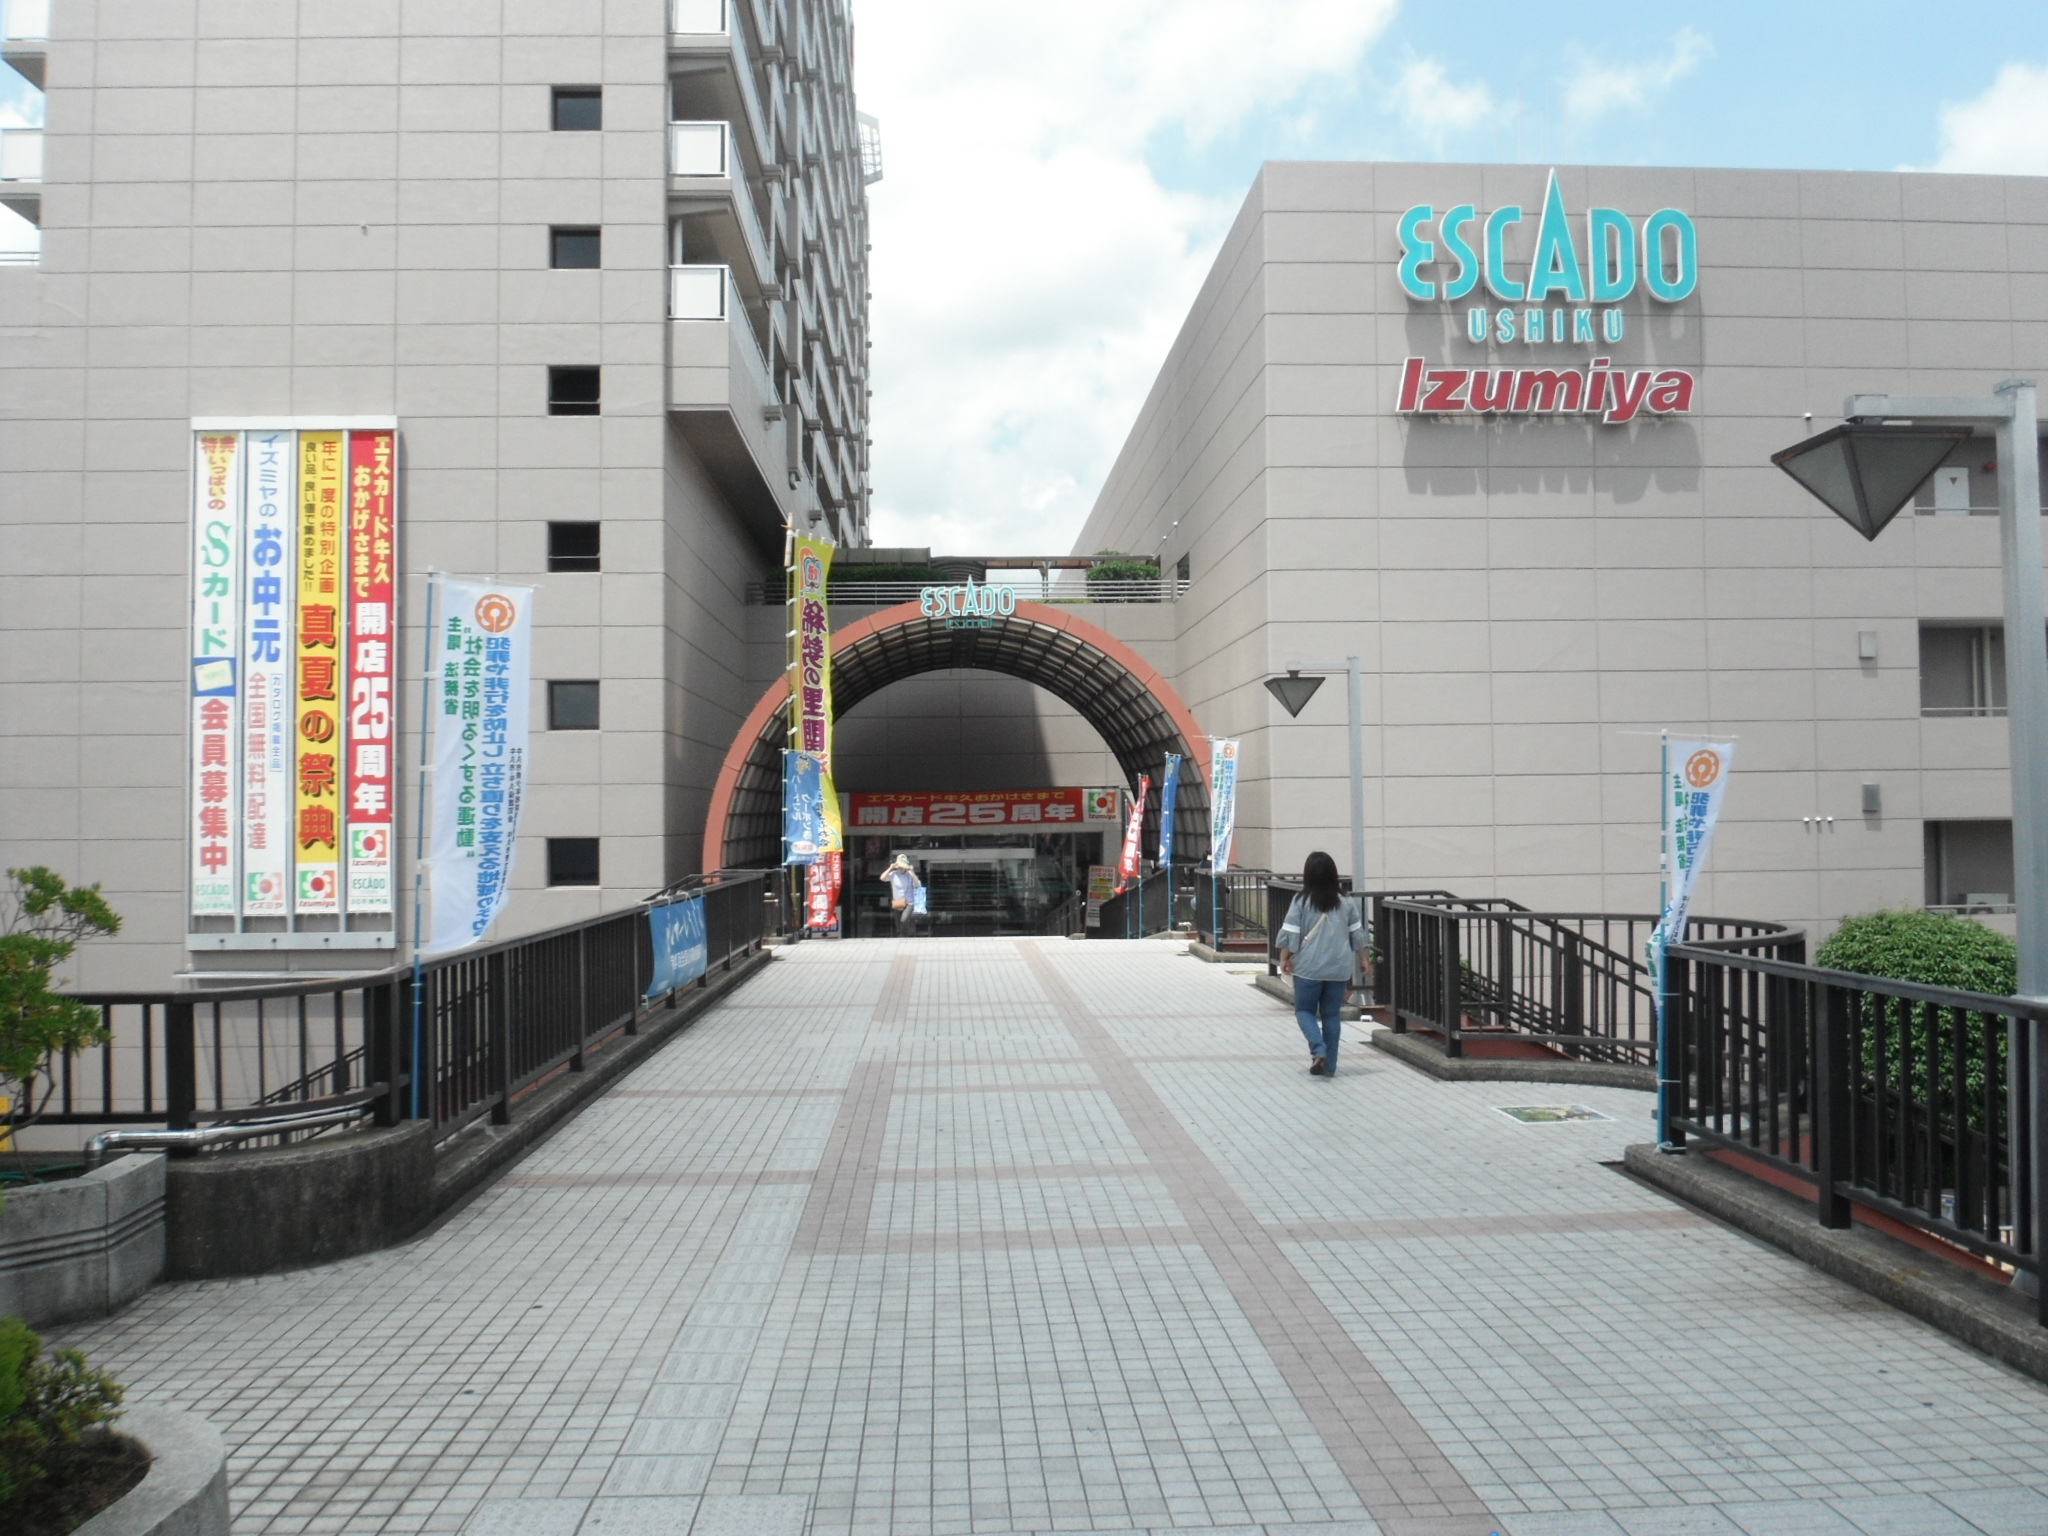 Shopping centre. Es card Ushiku until the (shopping center) 1111m